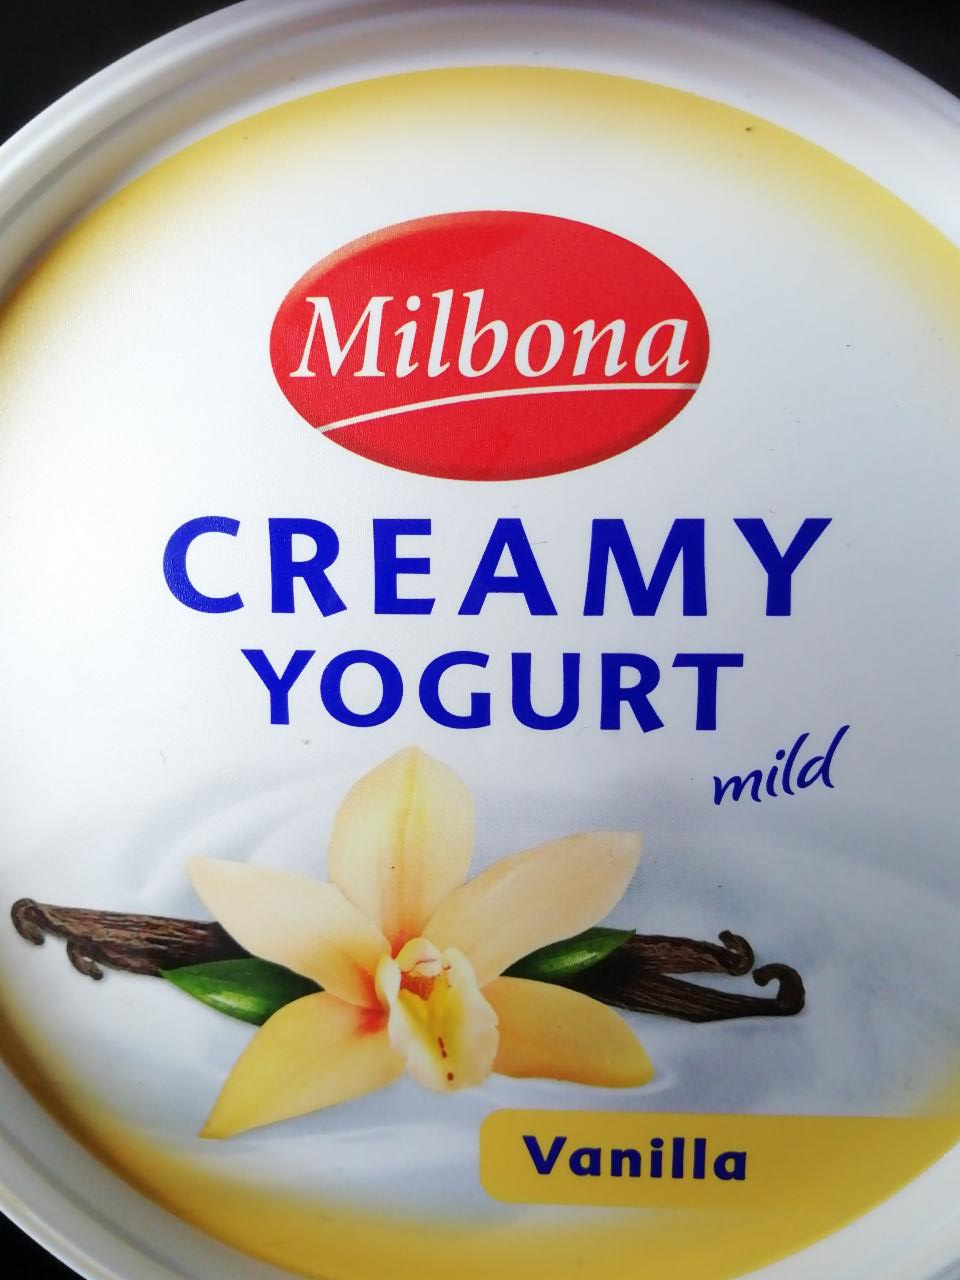 Képek - Creamy yogurt vanília Milbona